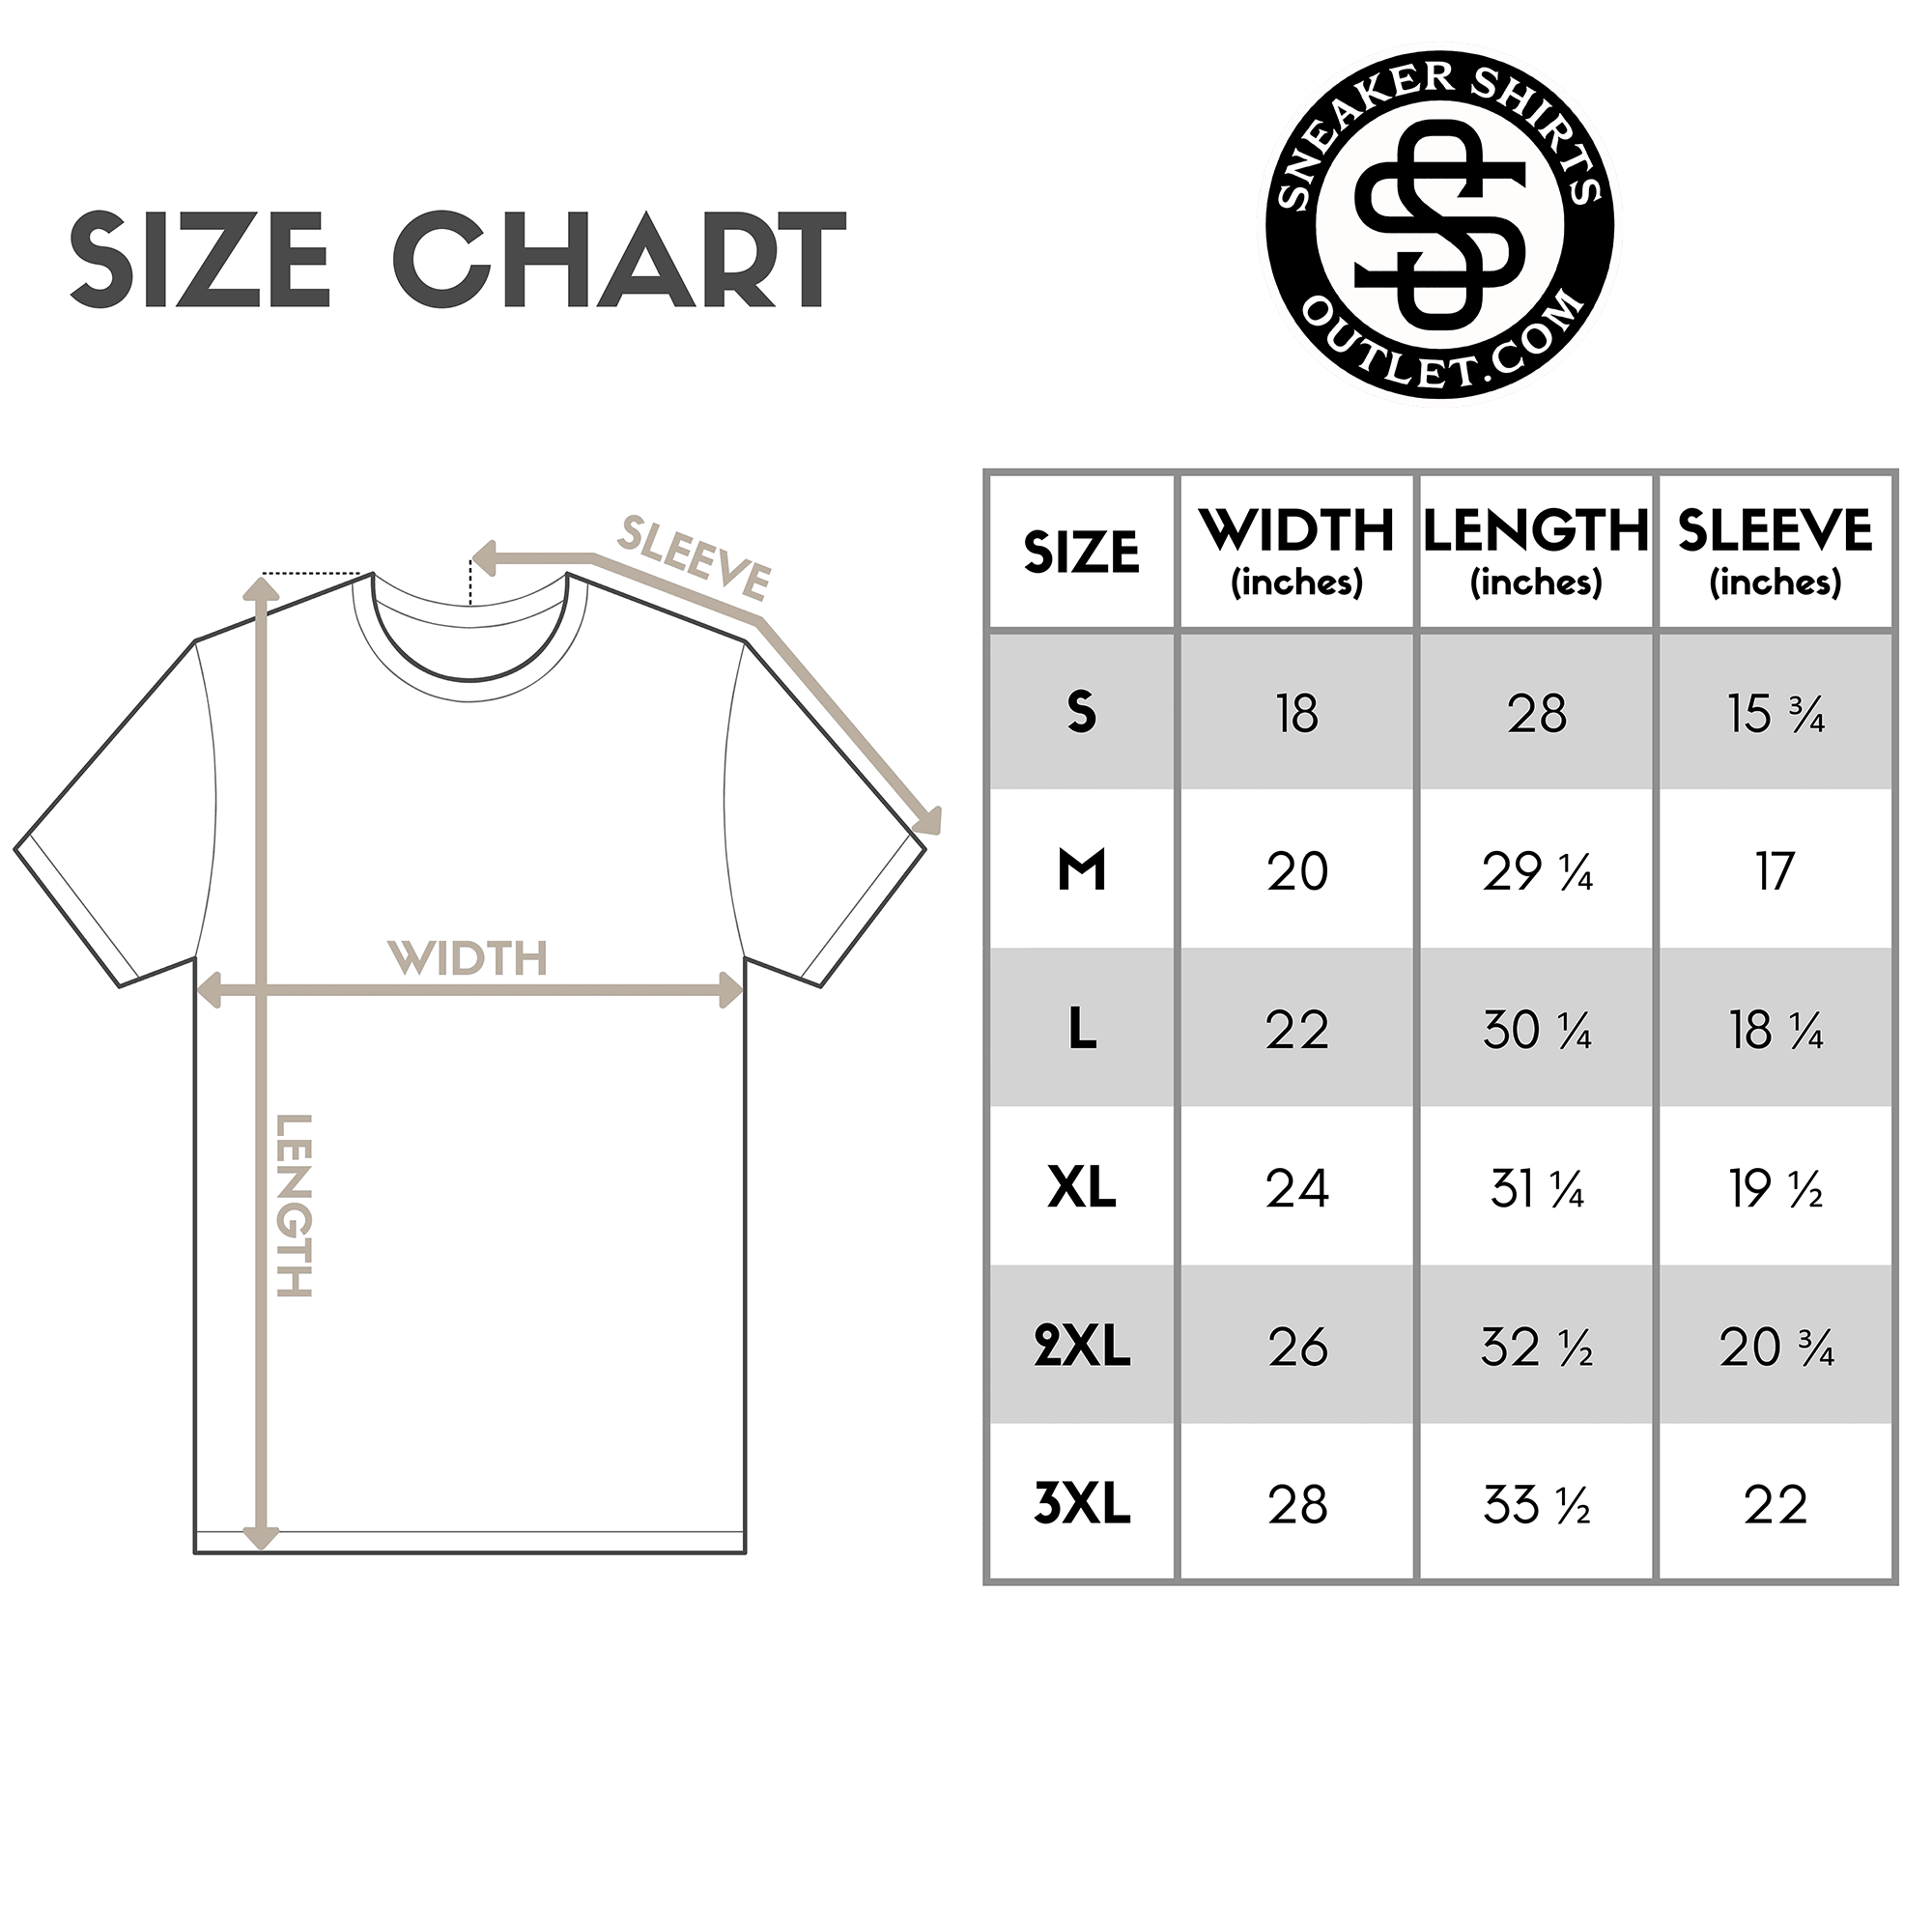 size chart 23 Melting Shirt AJ 1 Mid Alternate Bred Toe photo